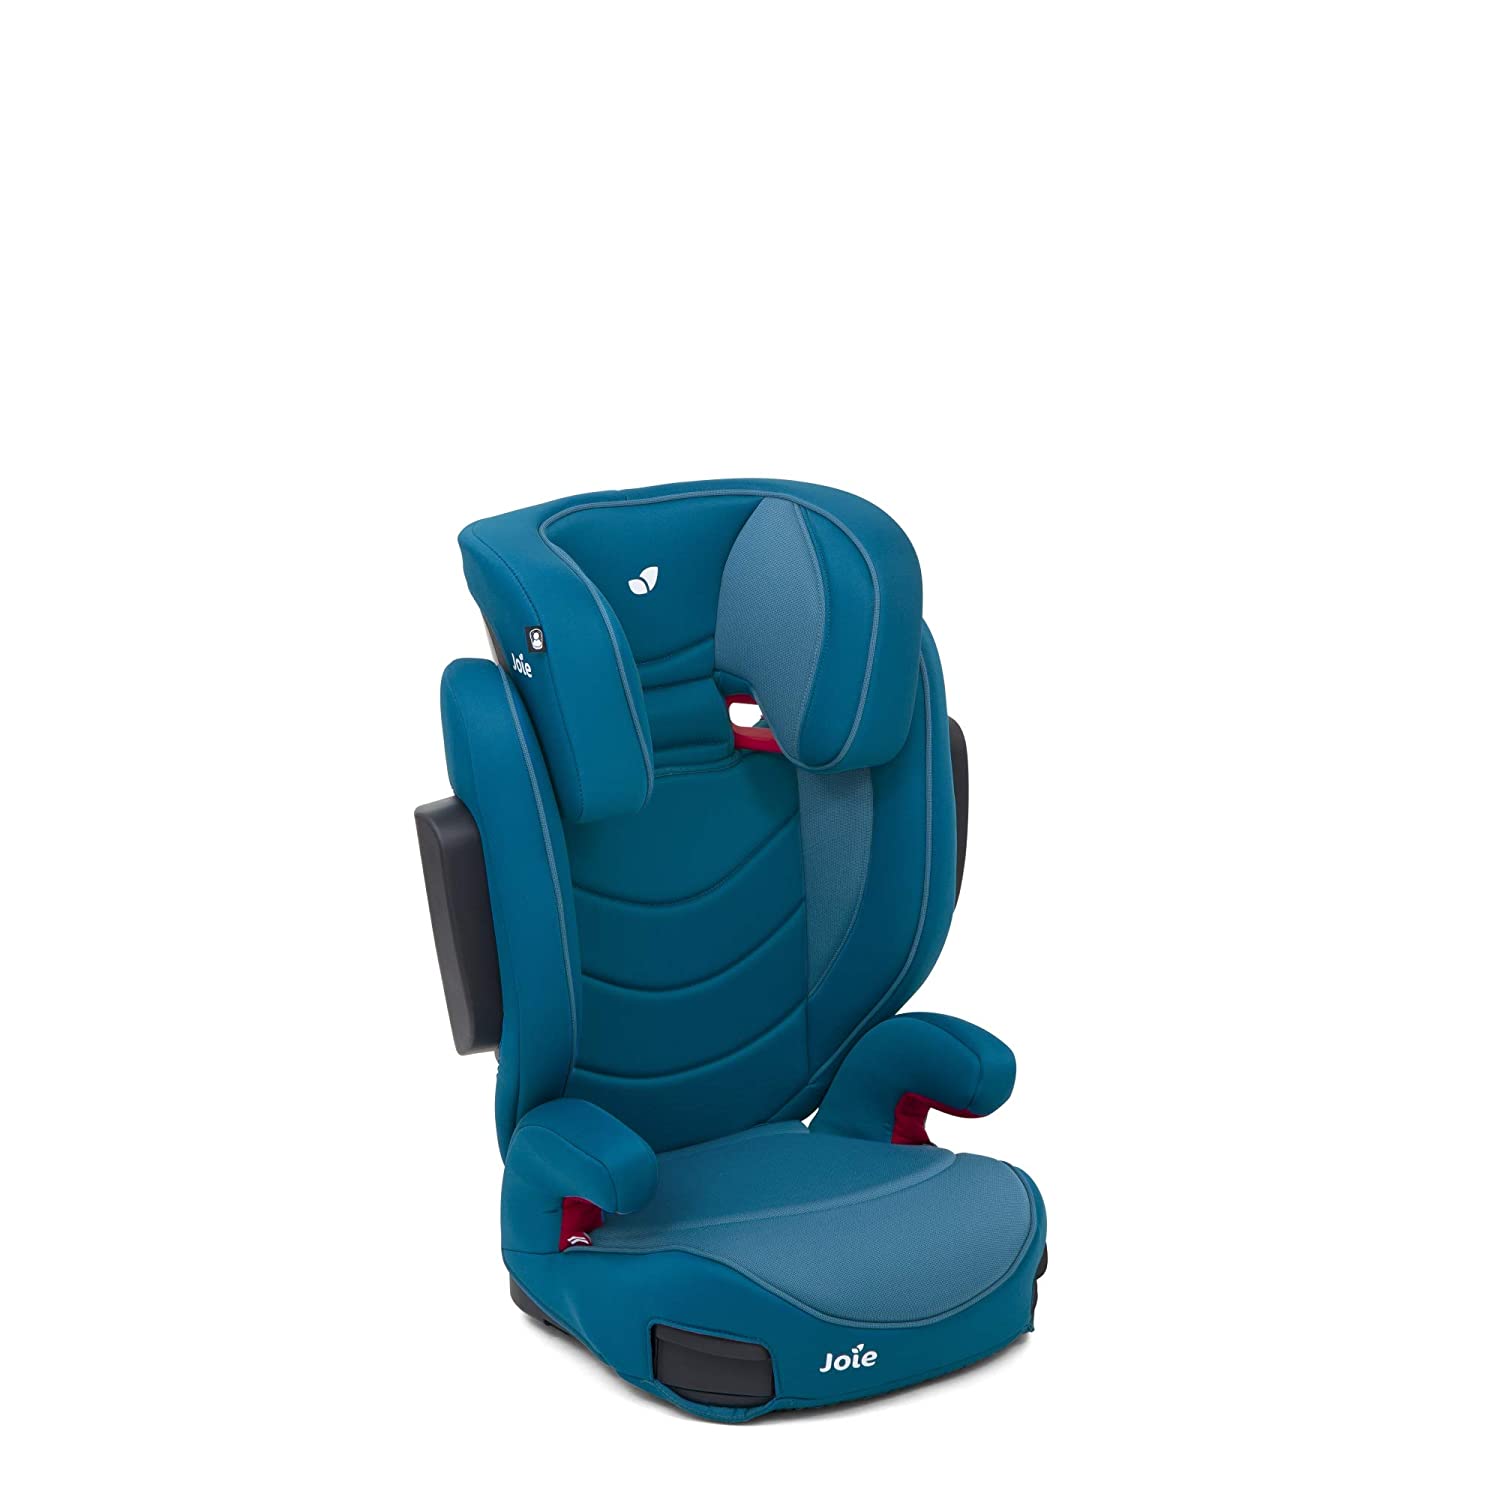 Joie Trillo LX Child Car Seat Group 2/3, 15-36 kg, Pacific